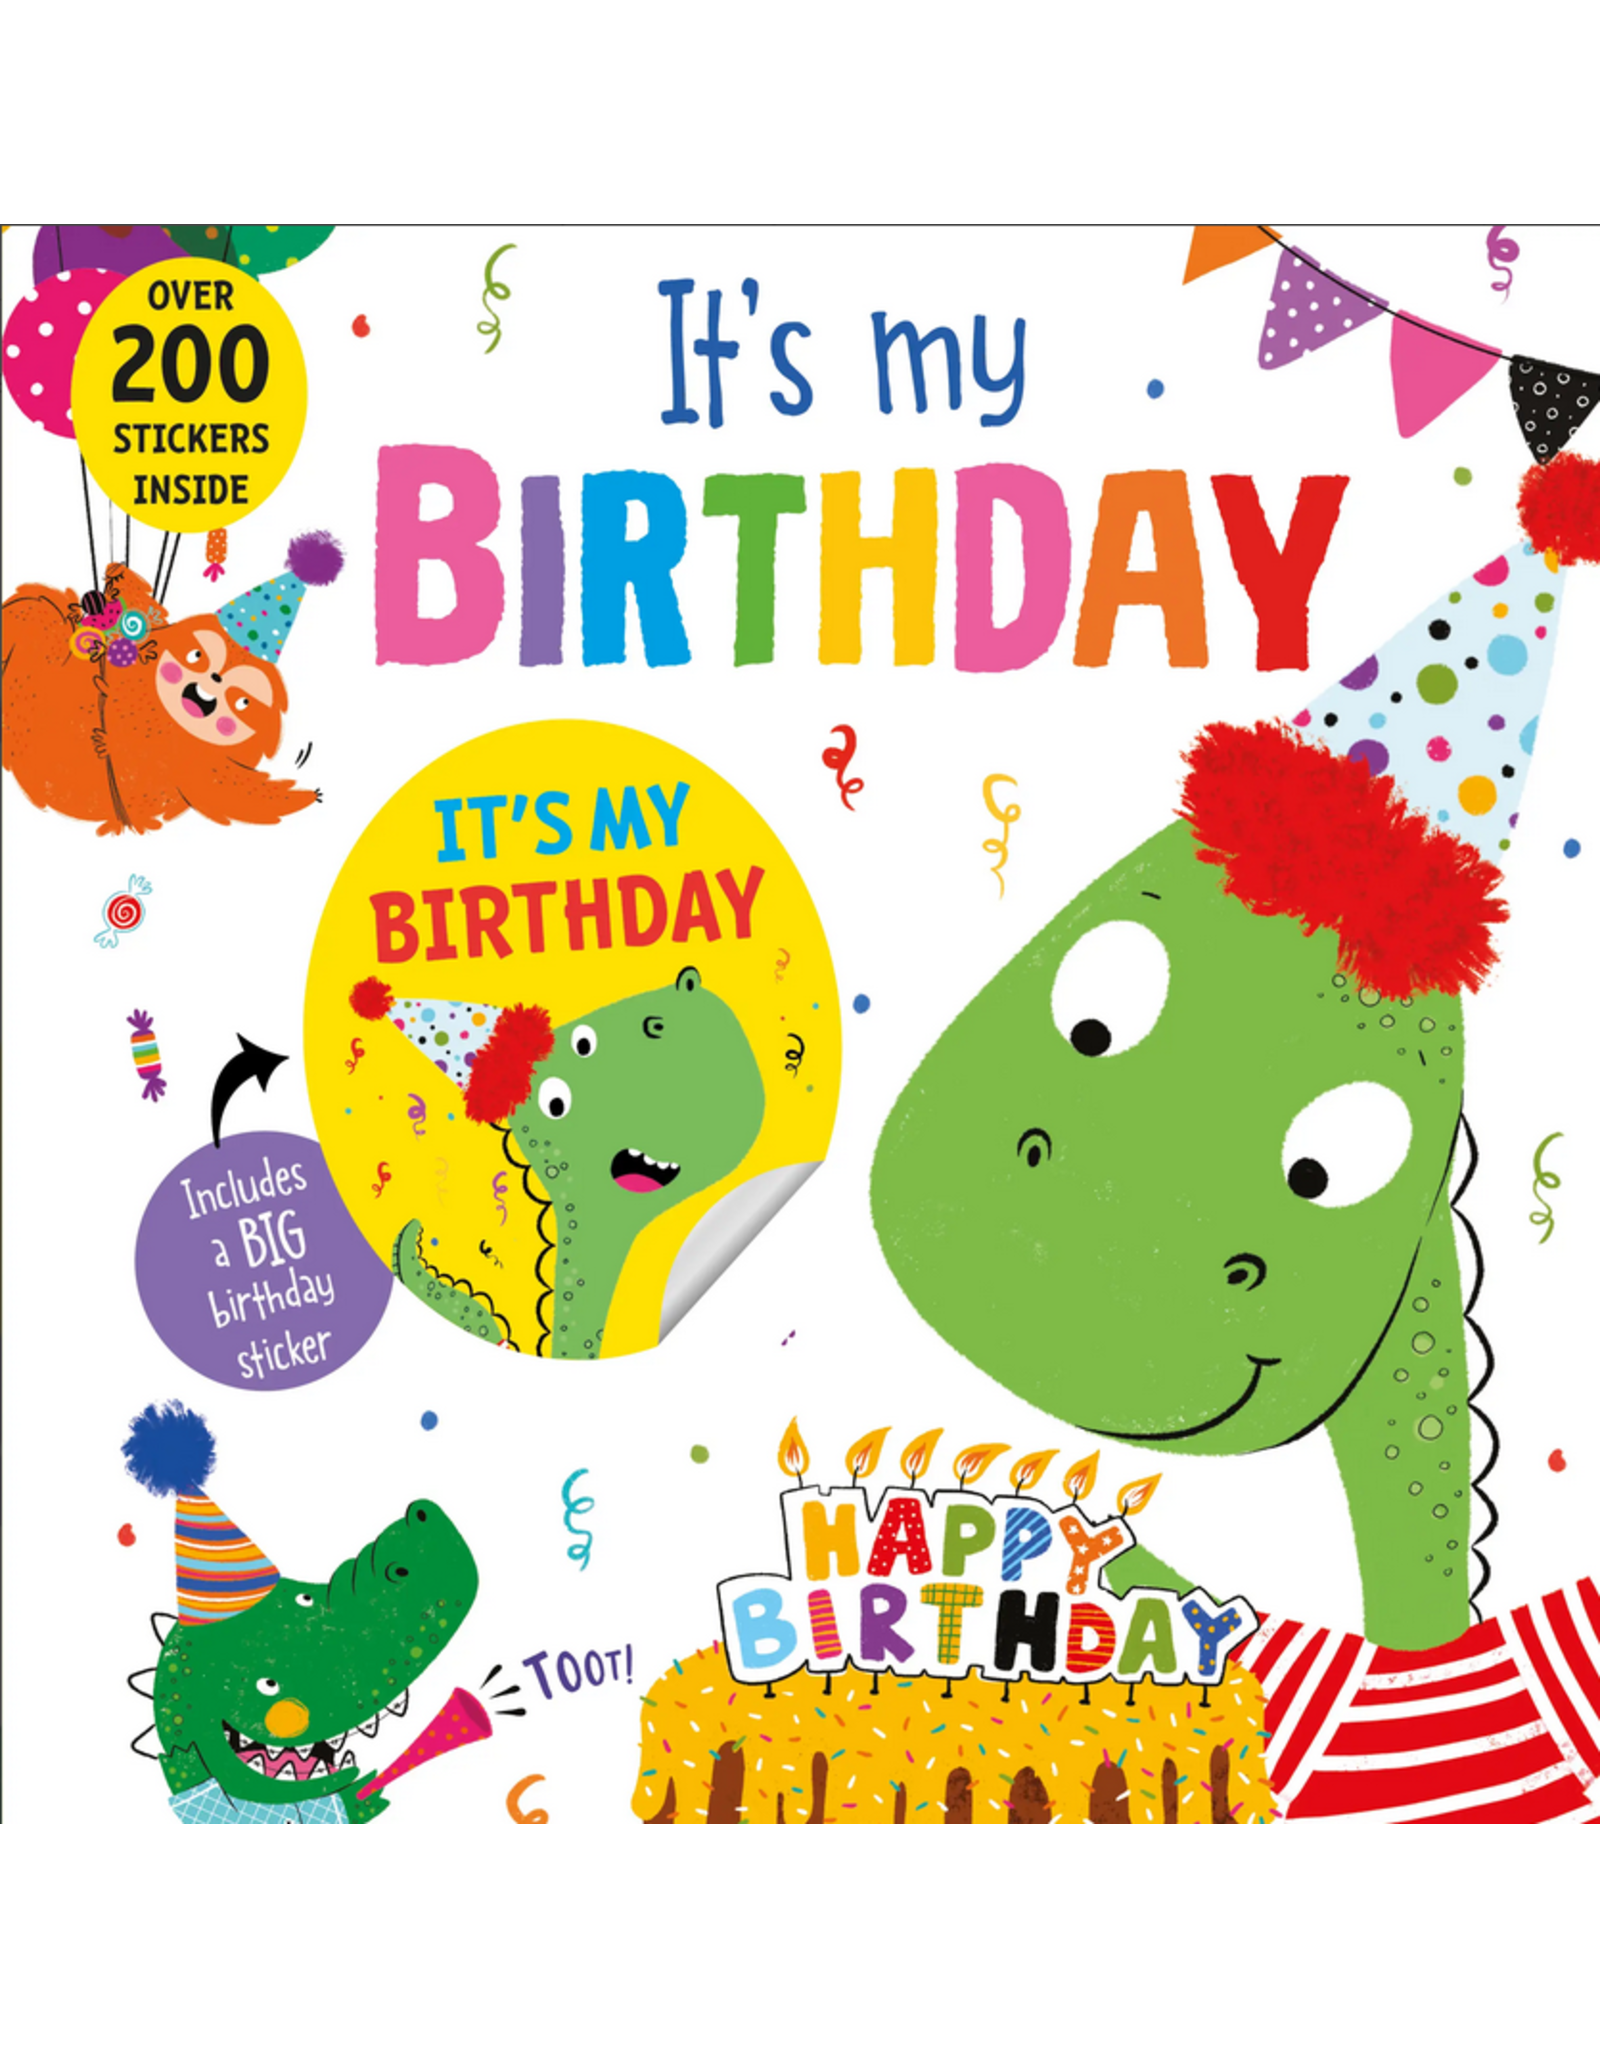 Sourcebooks It's My Birthday - Dinosaur